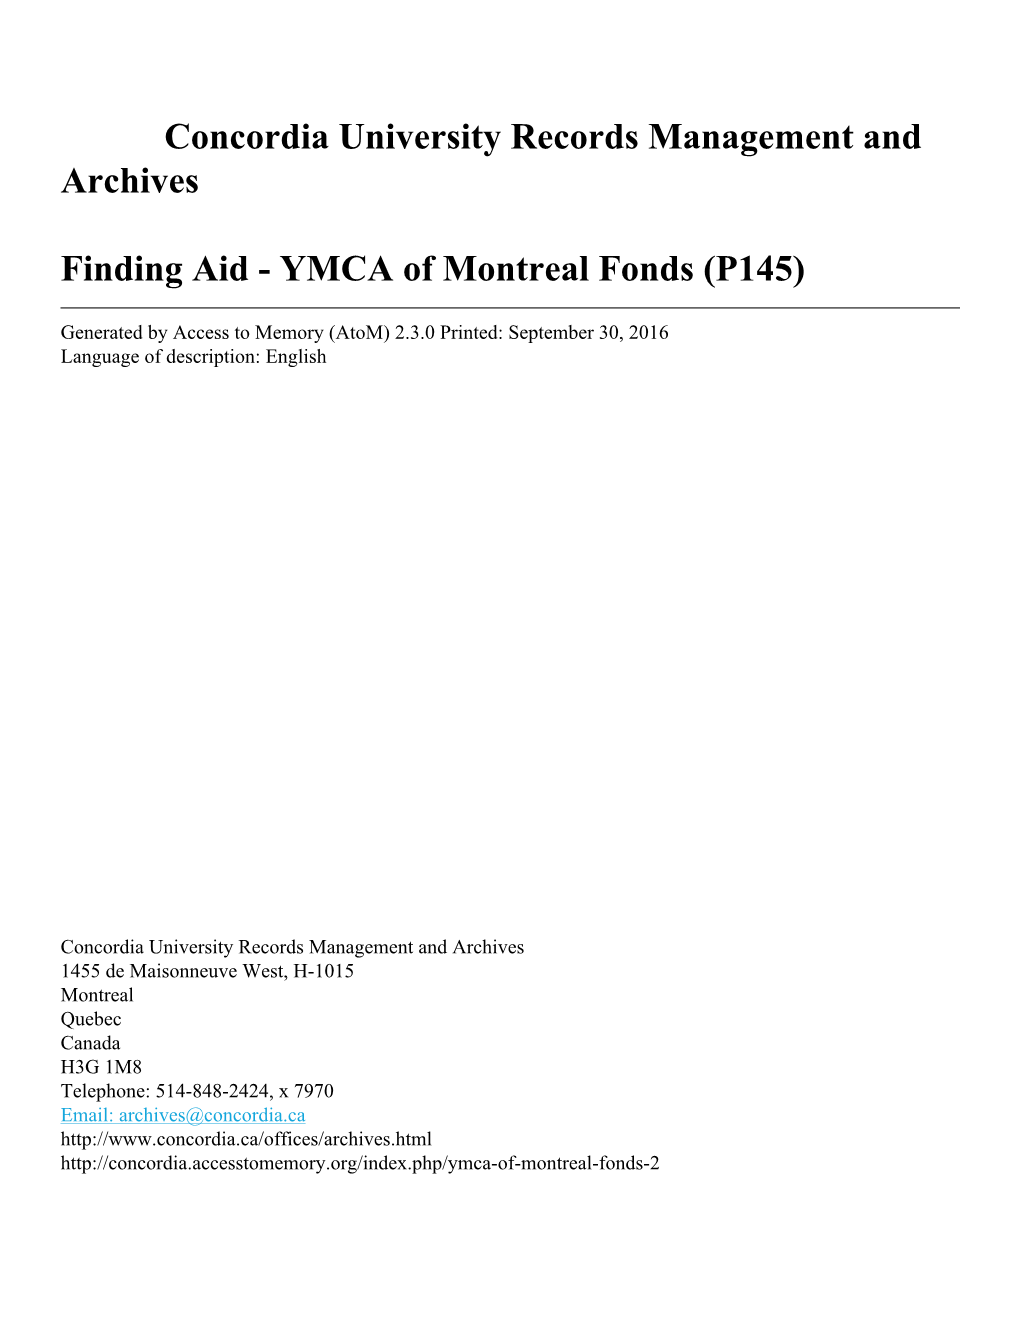 YMCA of Montreal Fonds (P145)